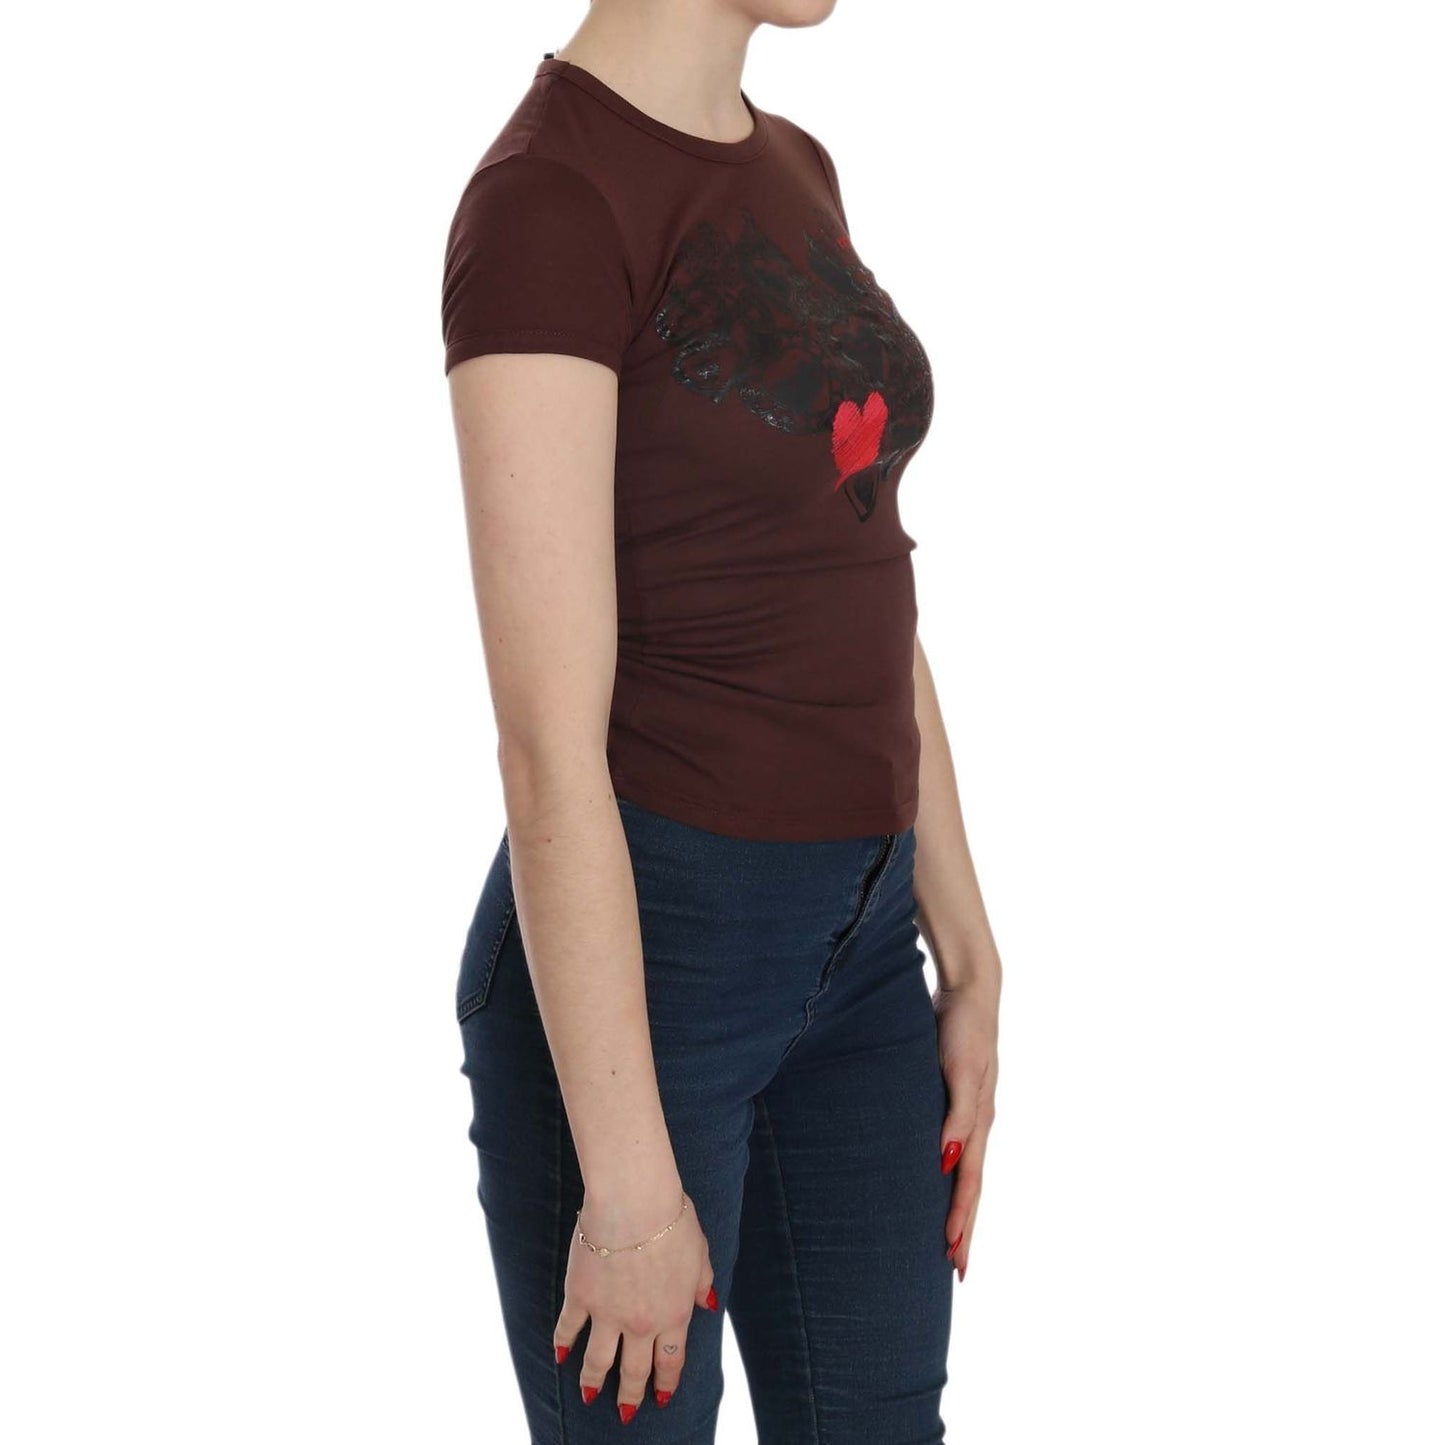 Exte | Brown Hearts Short Sleeve Casual T-shirt Top | McRichard Designer Brands